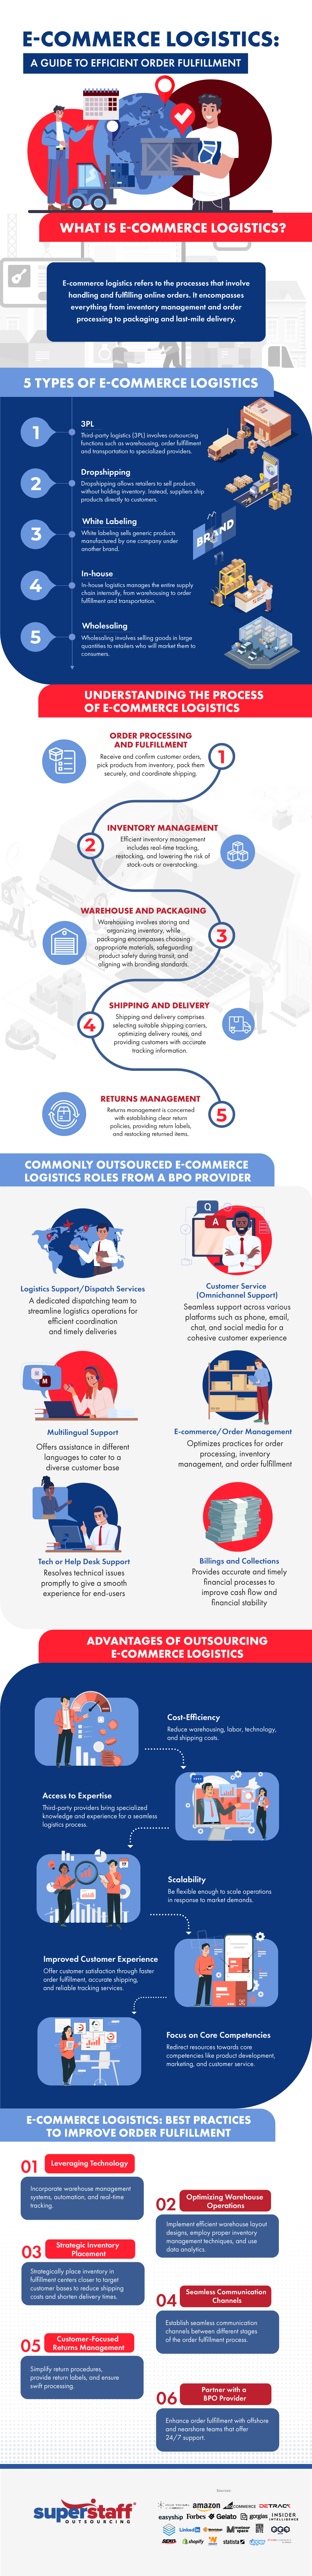 ecommerce logistics, infographic about e-commerce logistics